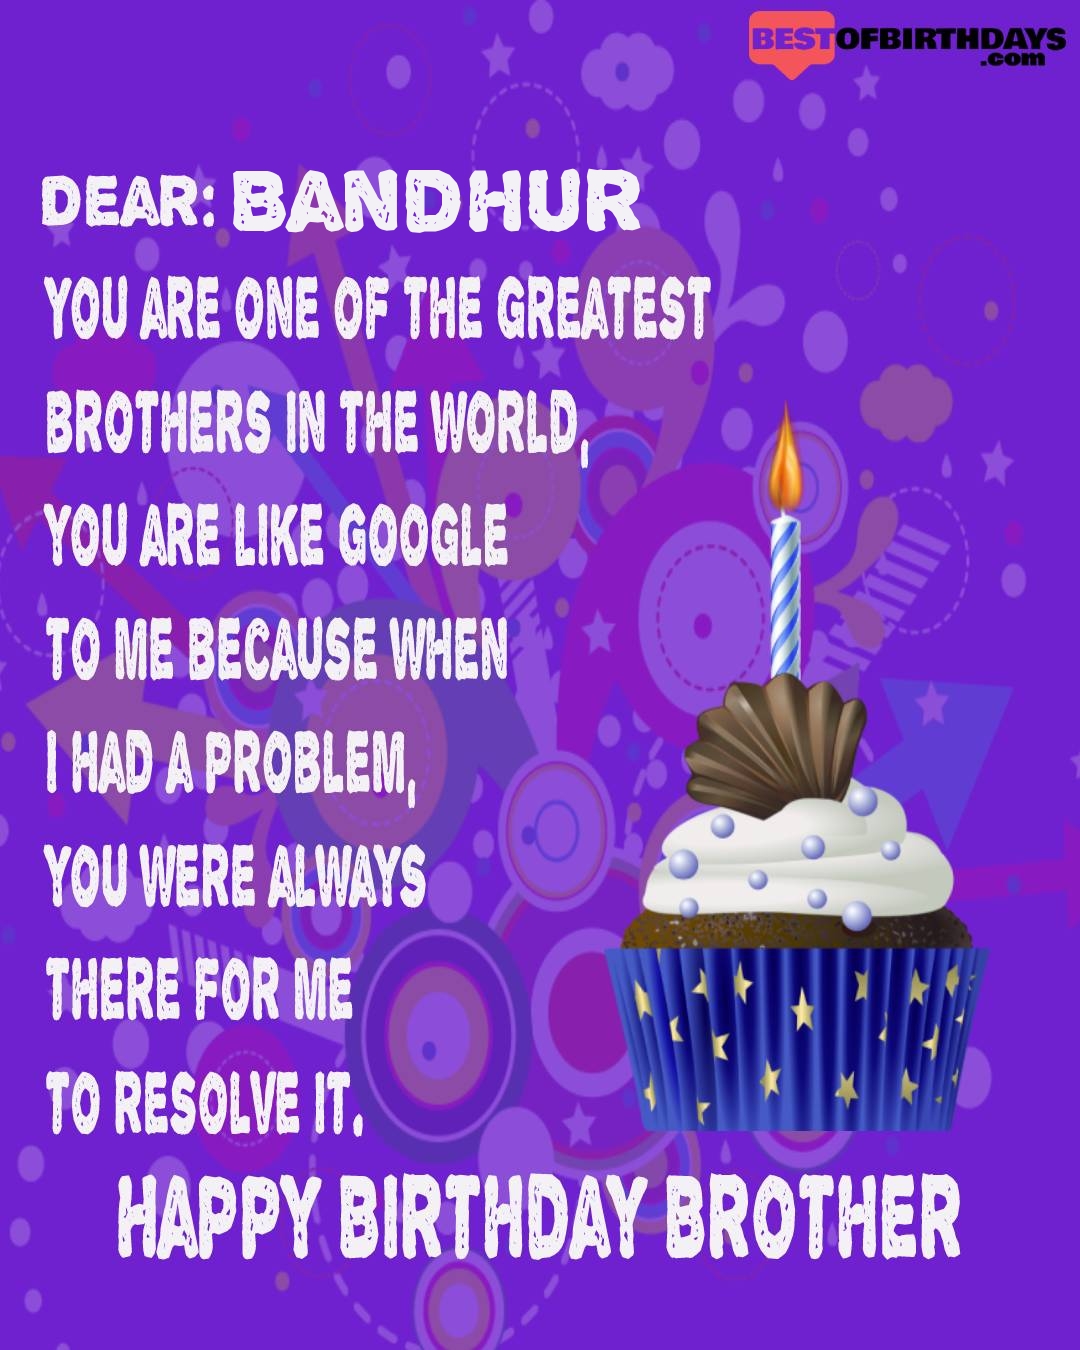 Happy birthday bandhur bhai brother bro